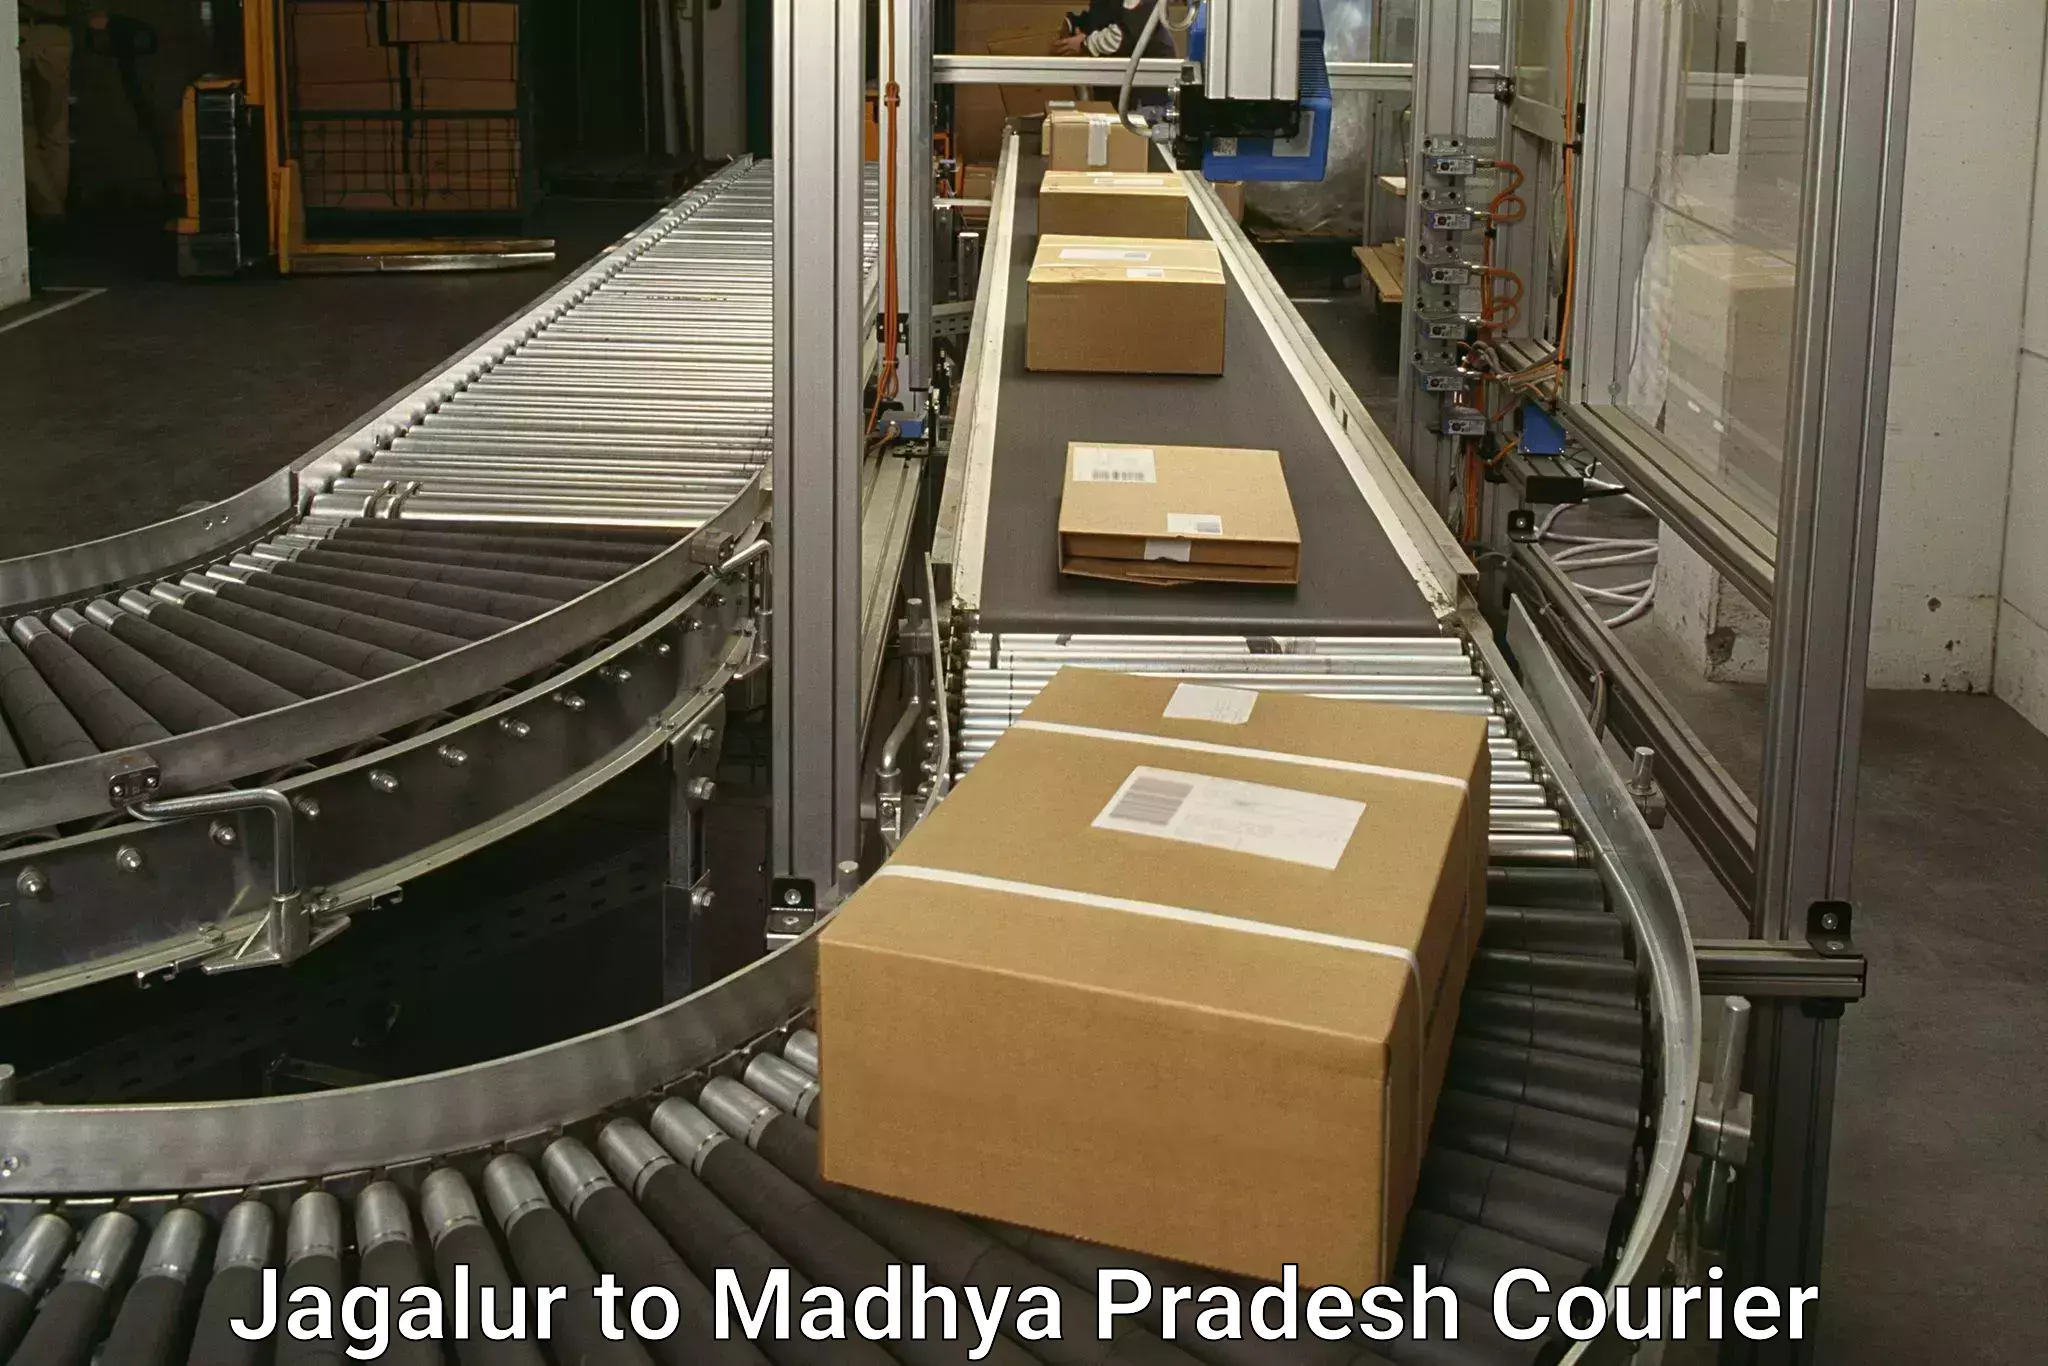 Express delivery capabilities Jagalur to Vidisha